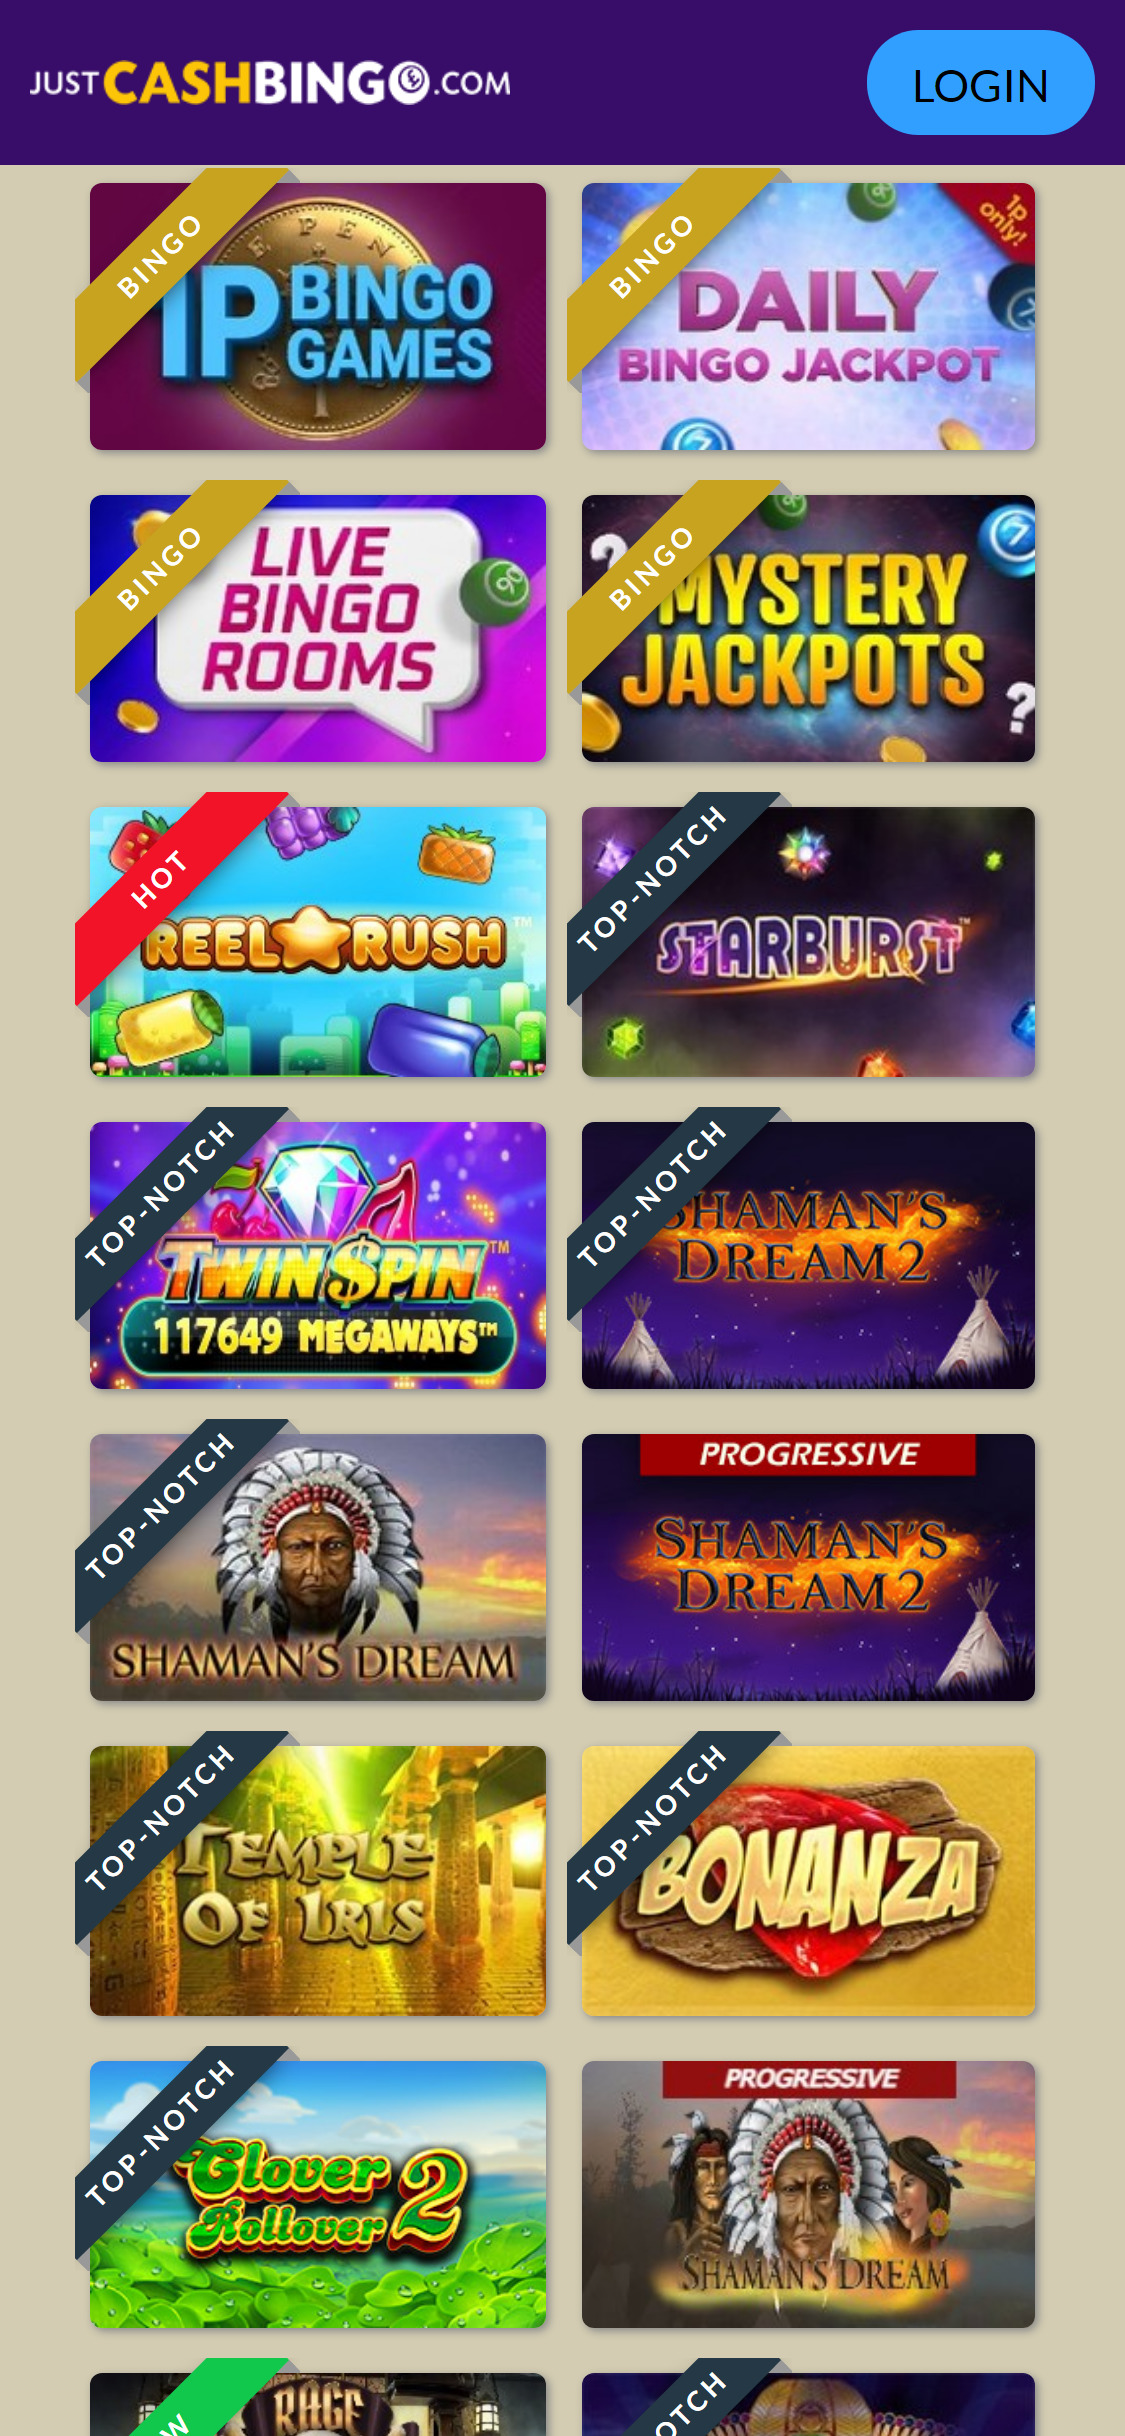 Just Cash Bingo Casino Mobile Games Review